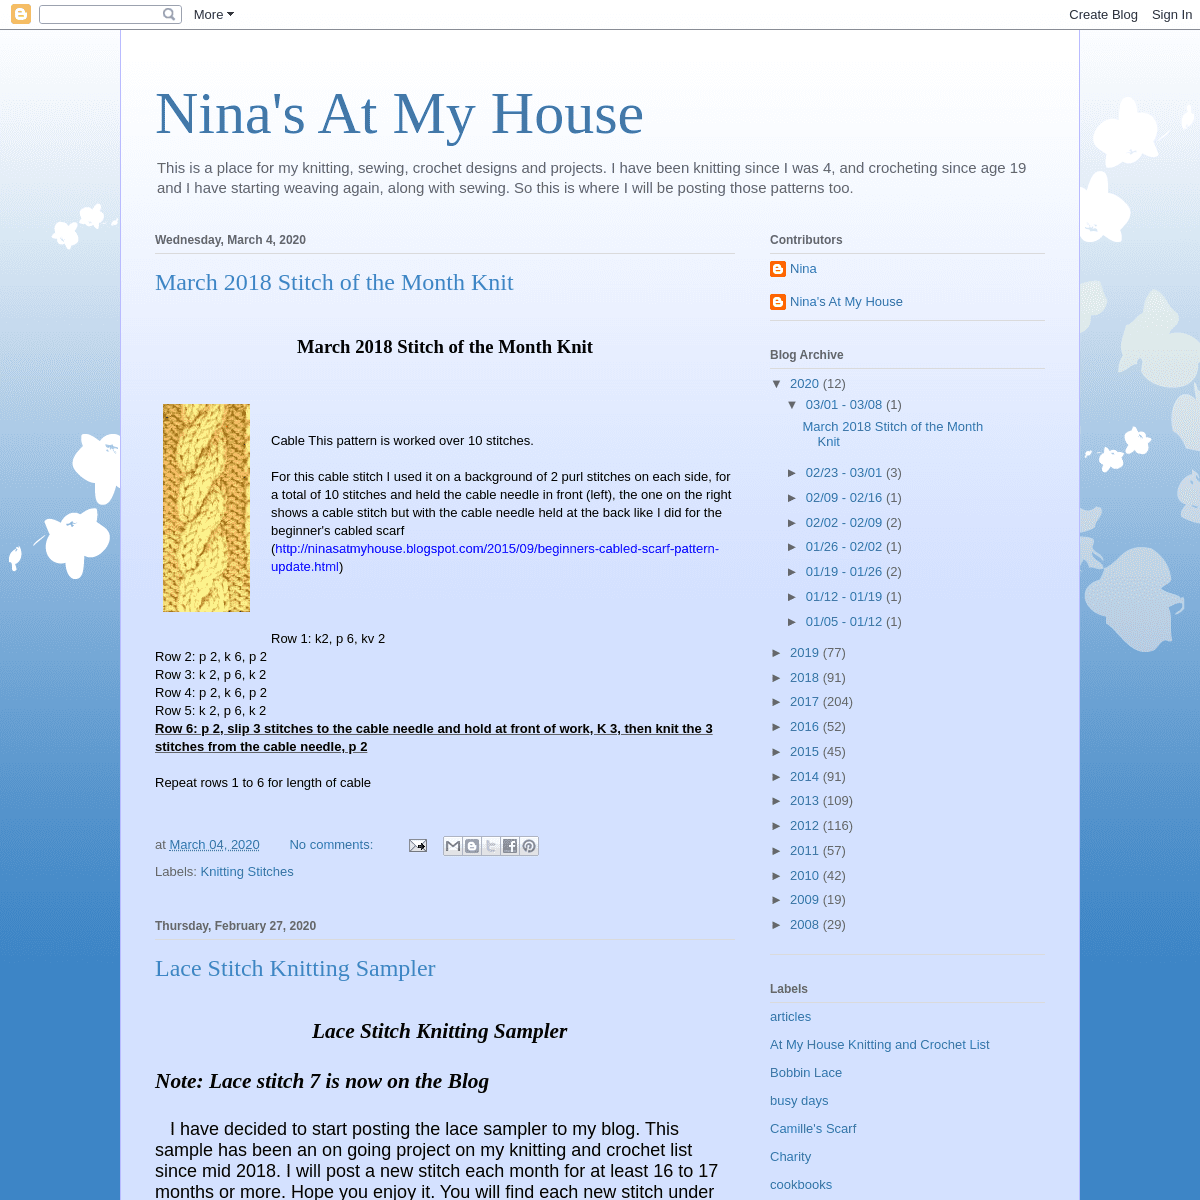 A complete backup of ninasatmyhouse.blogspot.com